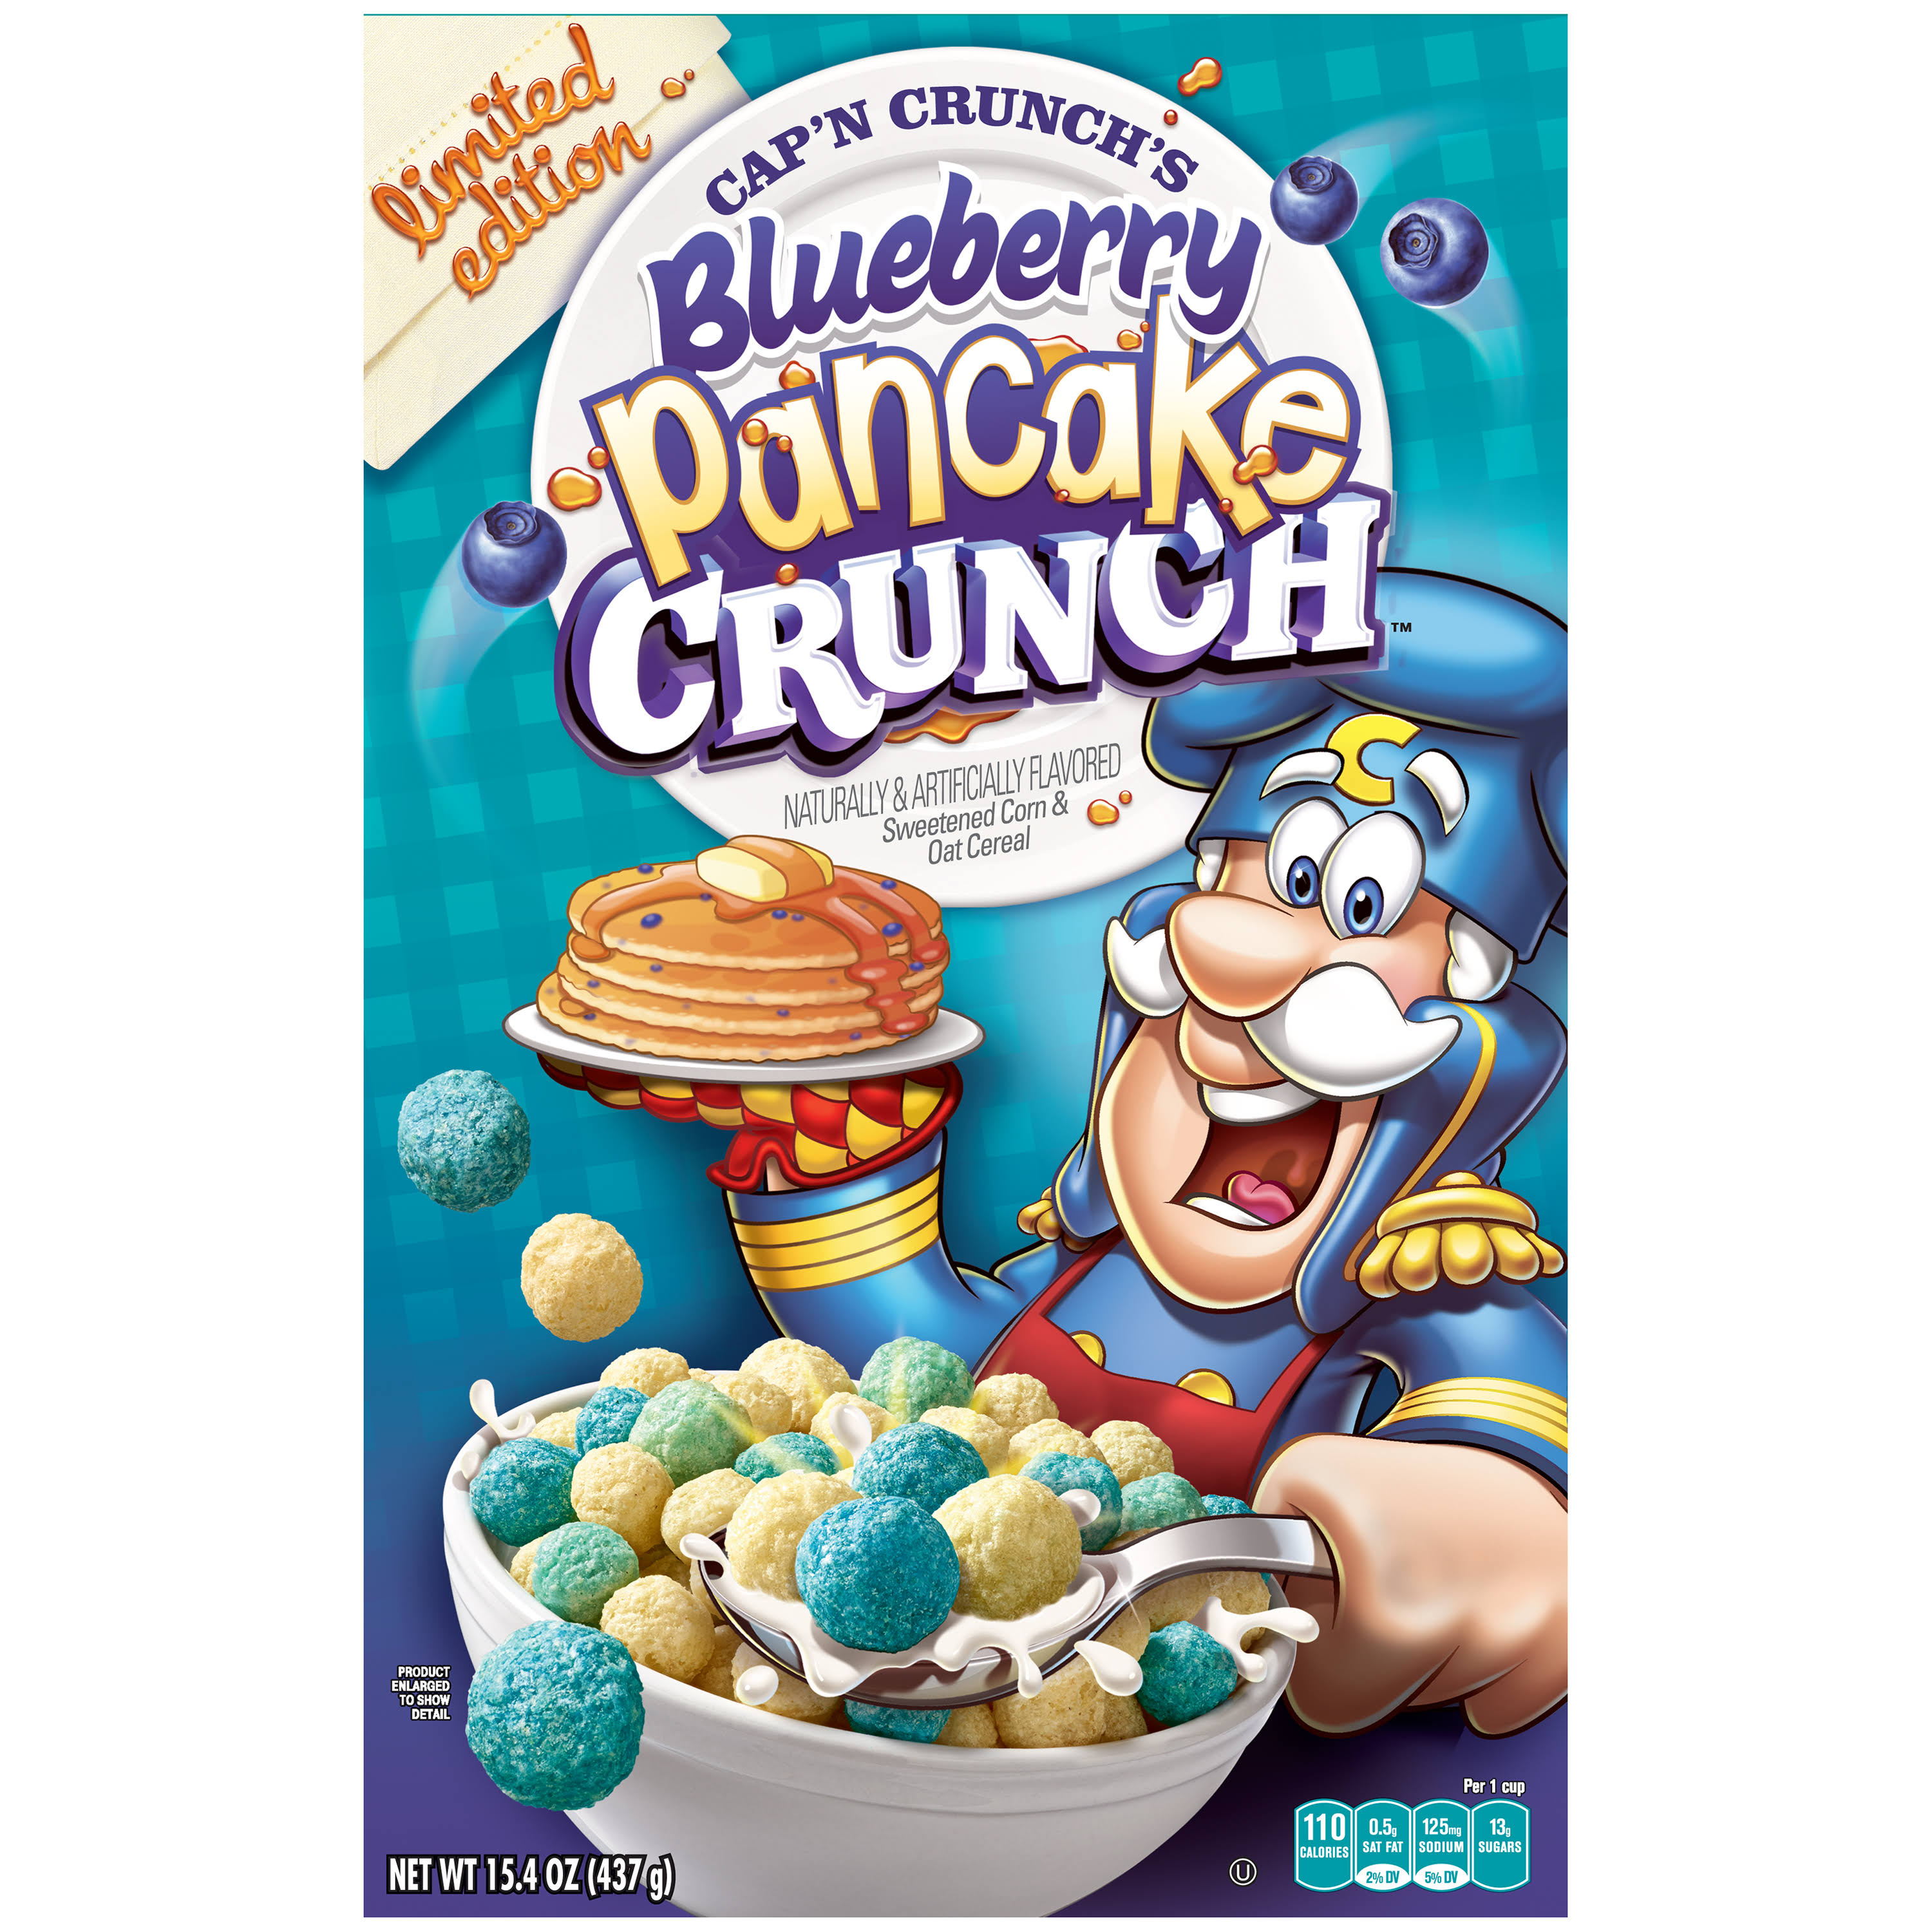 capn-crunch-blueberry-pancake-crunch-cereal-box.jpg